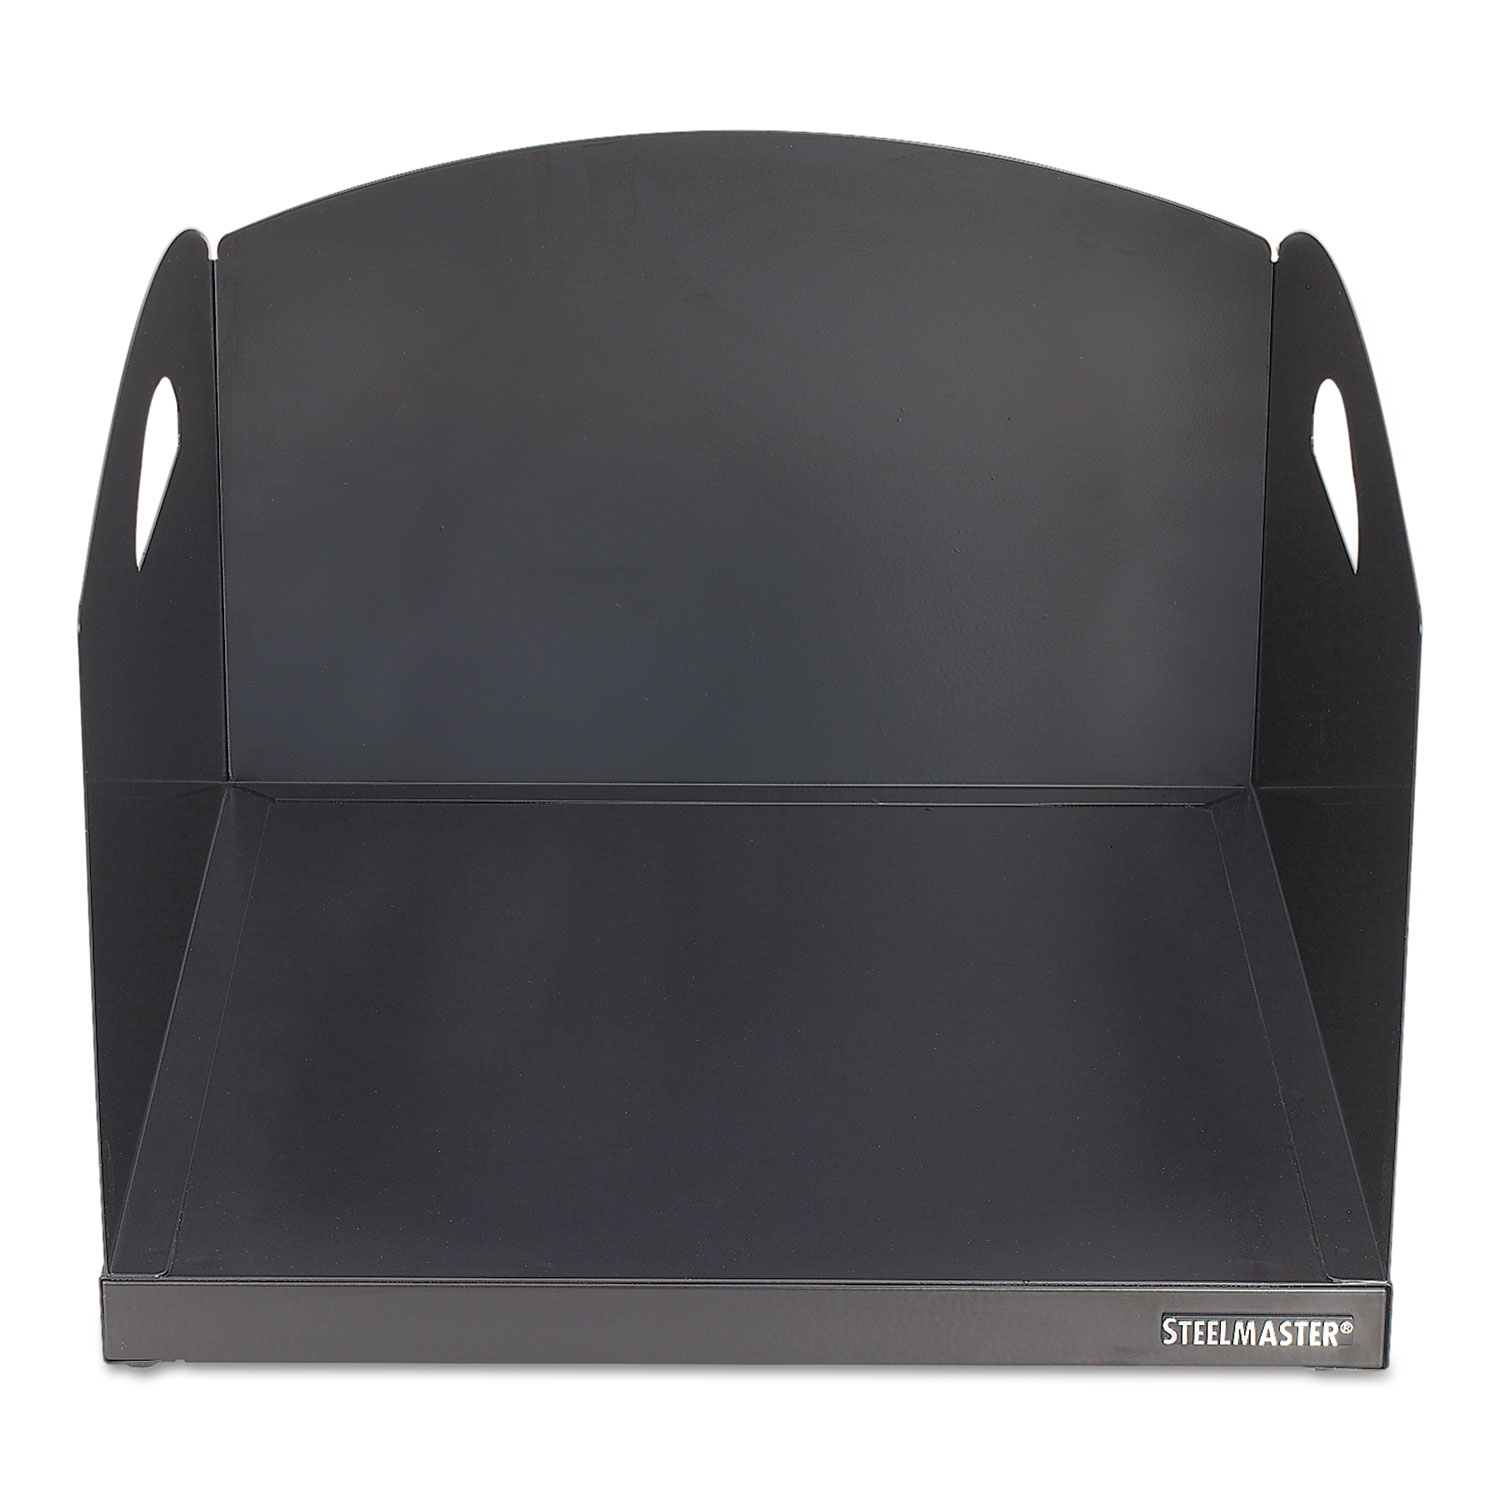 Big Stacker Inbox Desk Tray, Single Tier, 11 x 12 x 8, Black